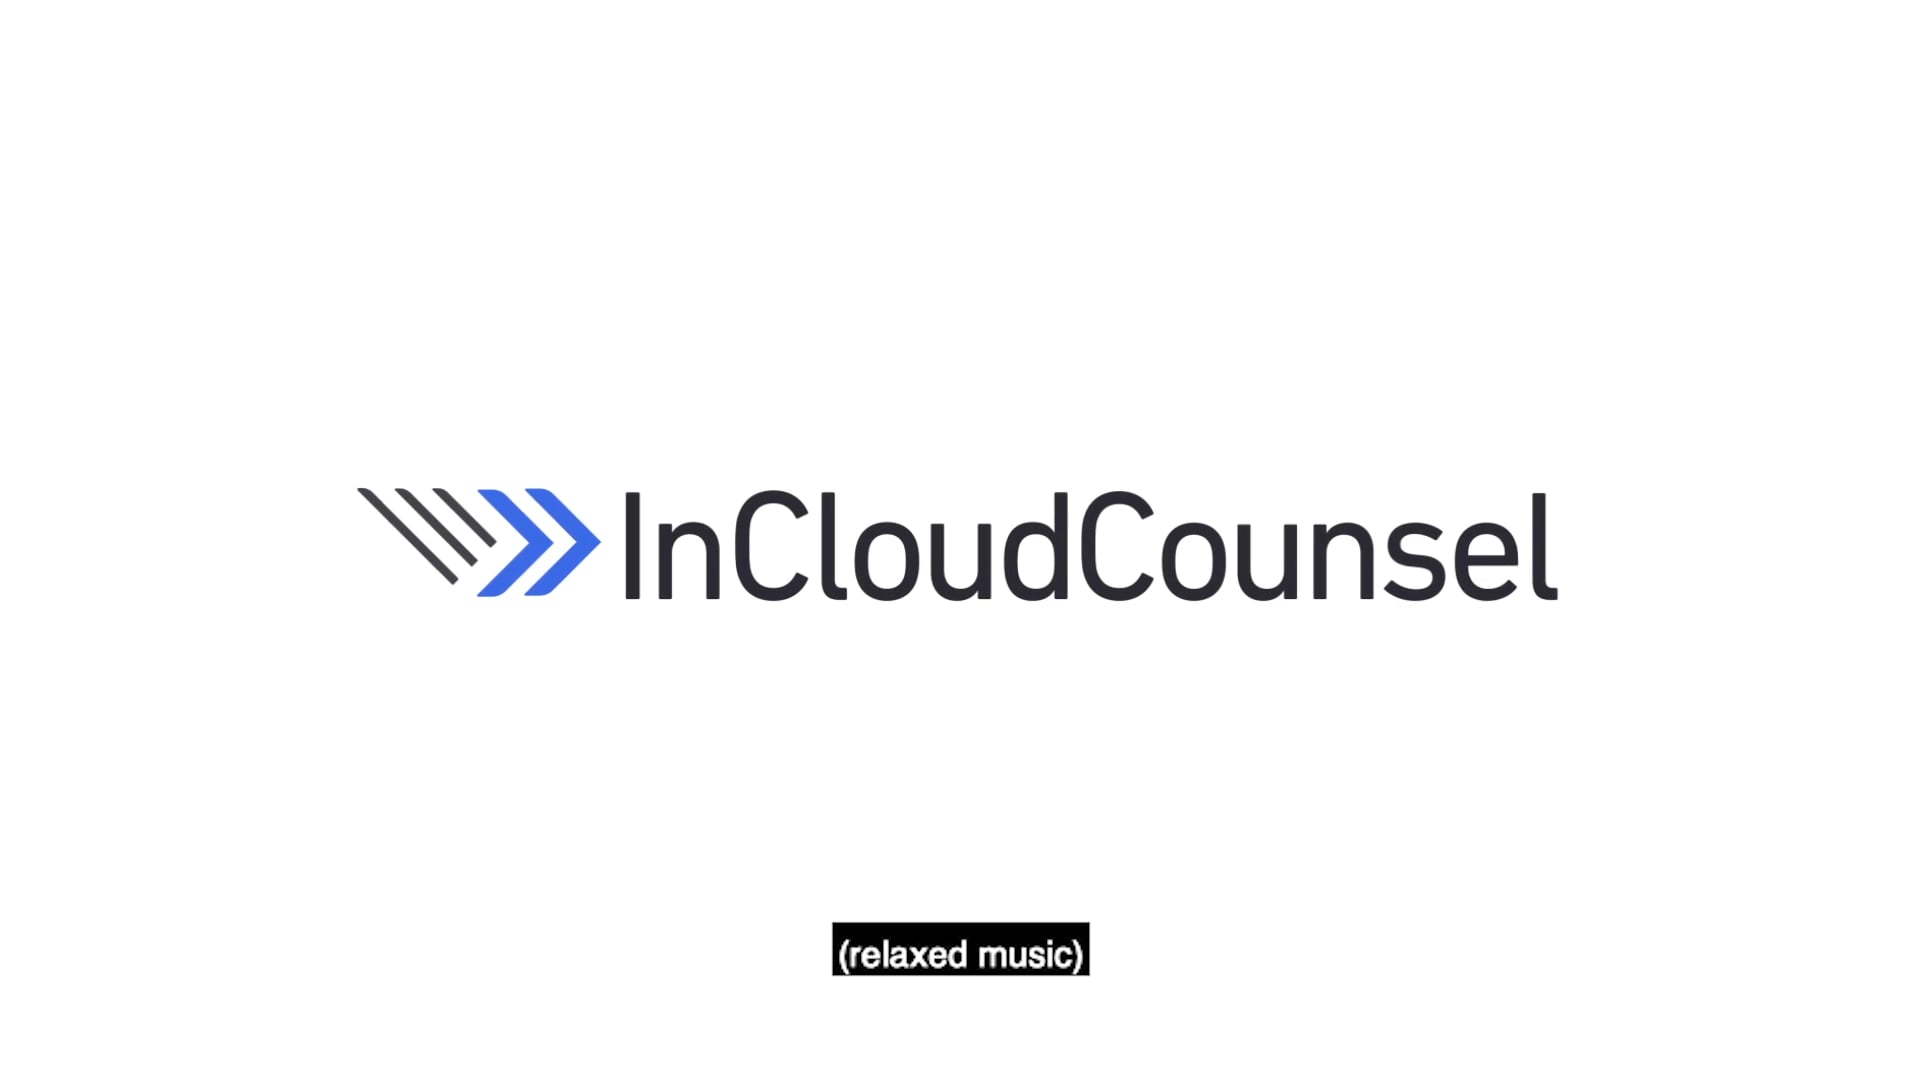 InCloudCounsel